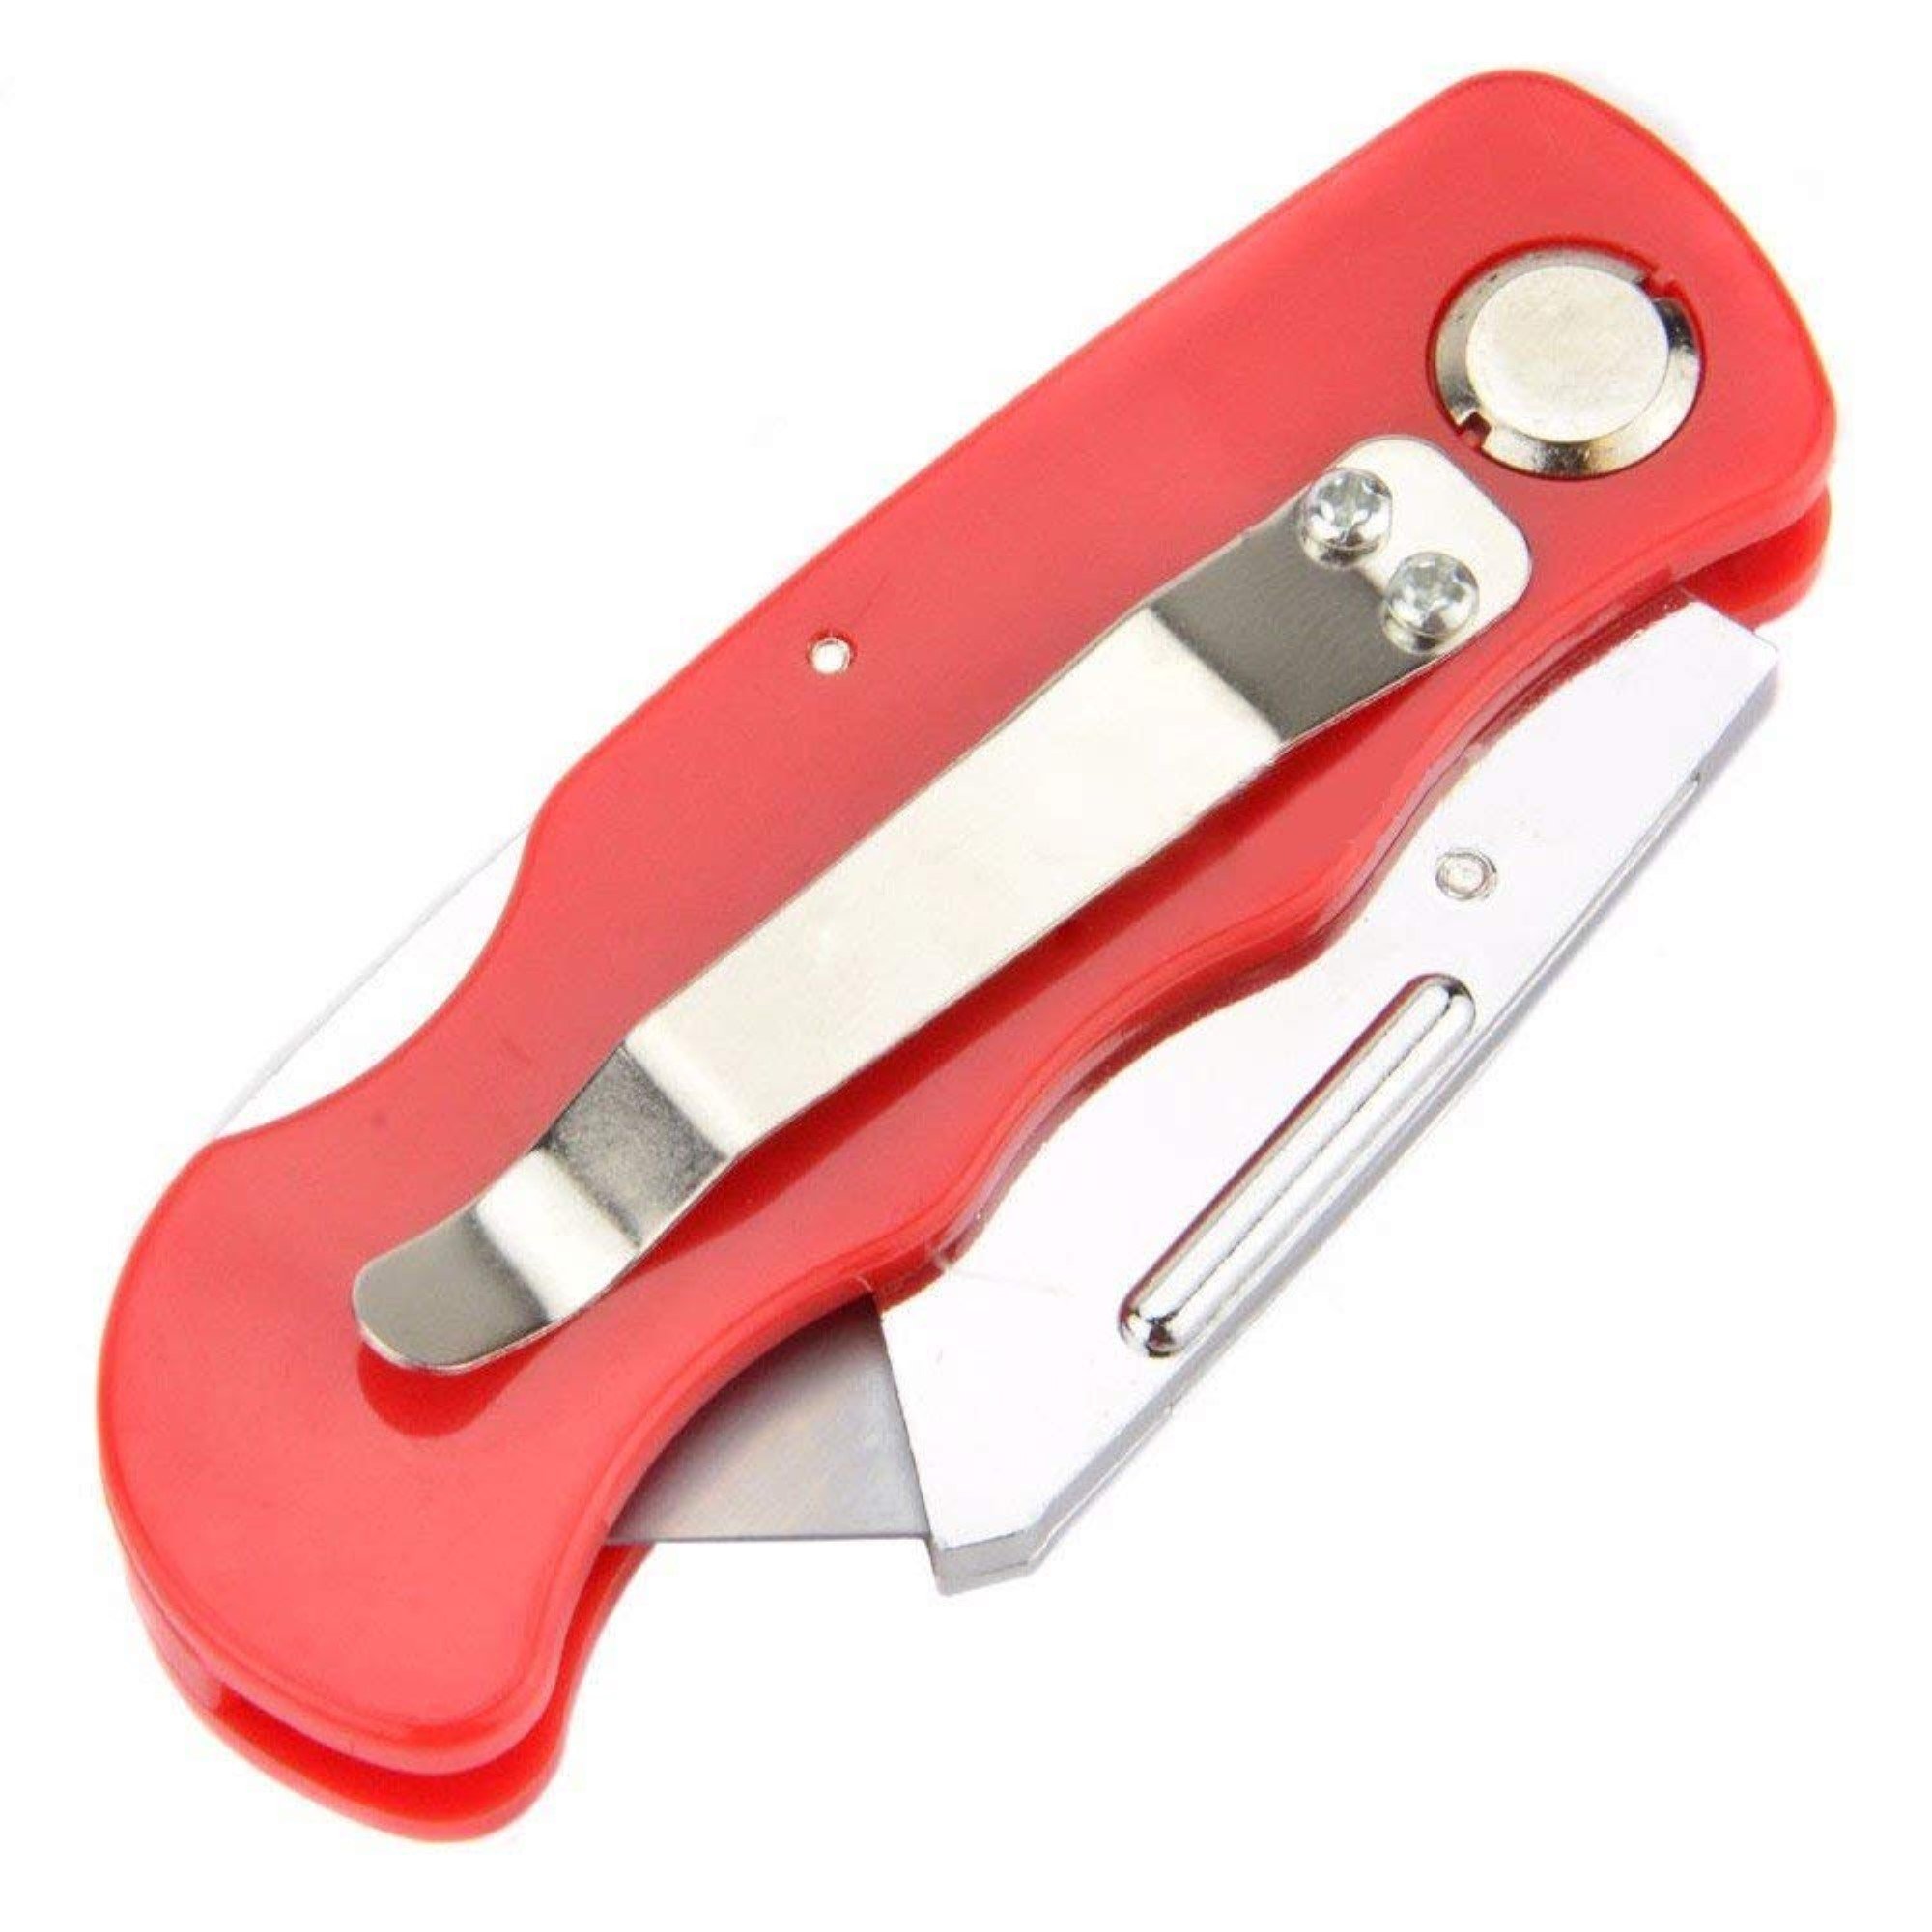 Folding Lockback Utility Pocket Knife Box Cutter with 5 Extra Blades Belt Clip